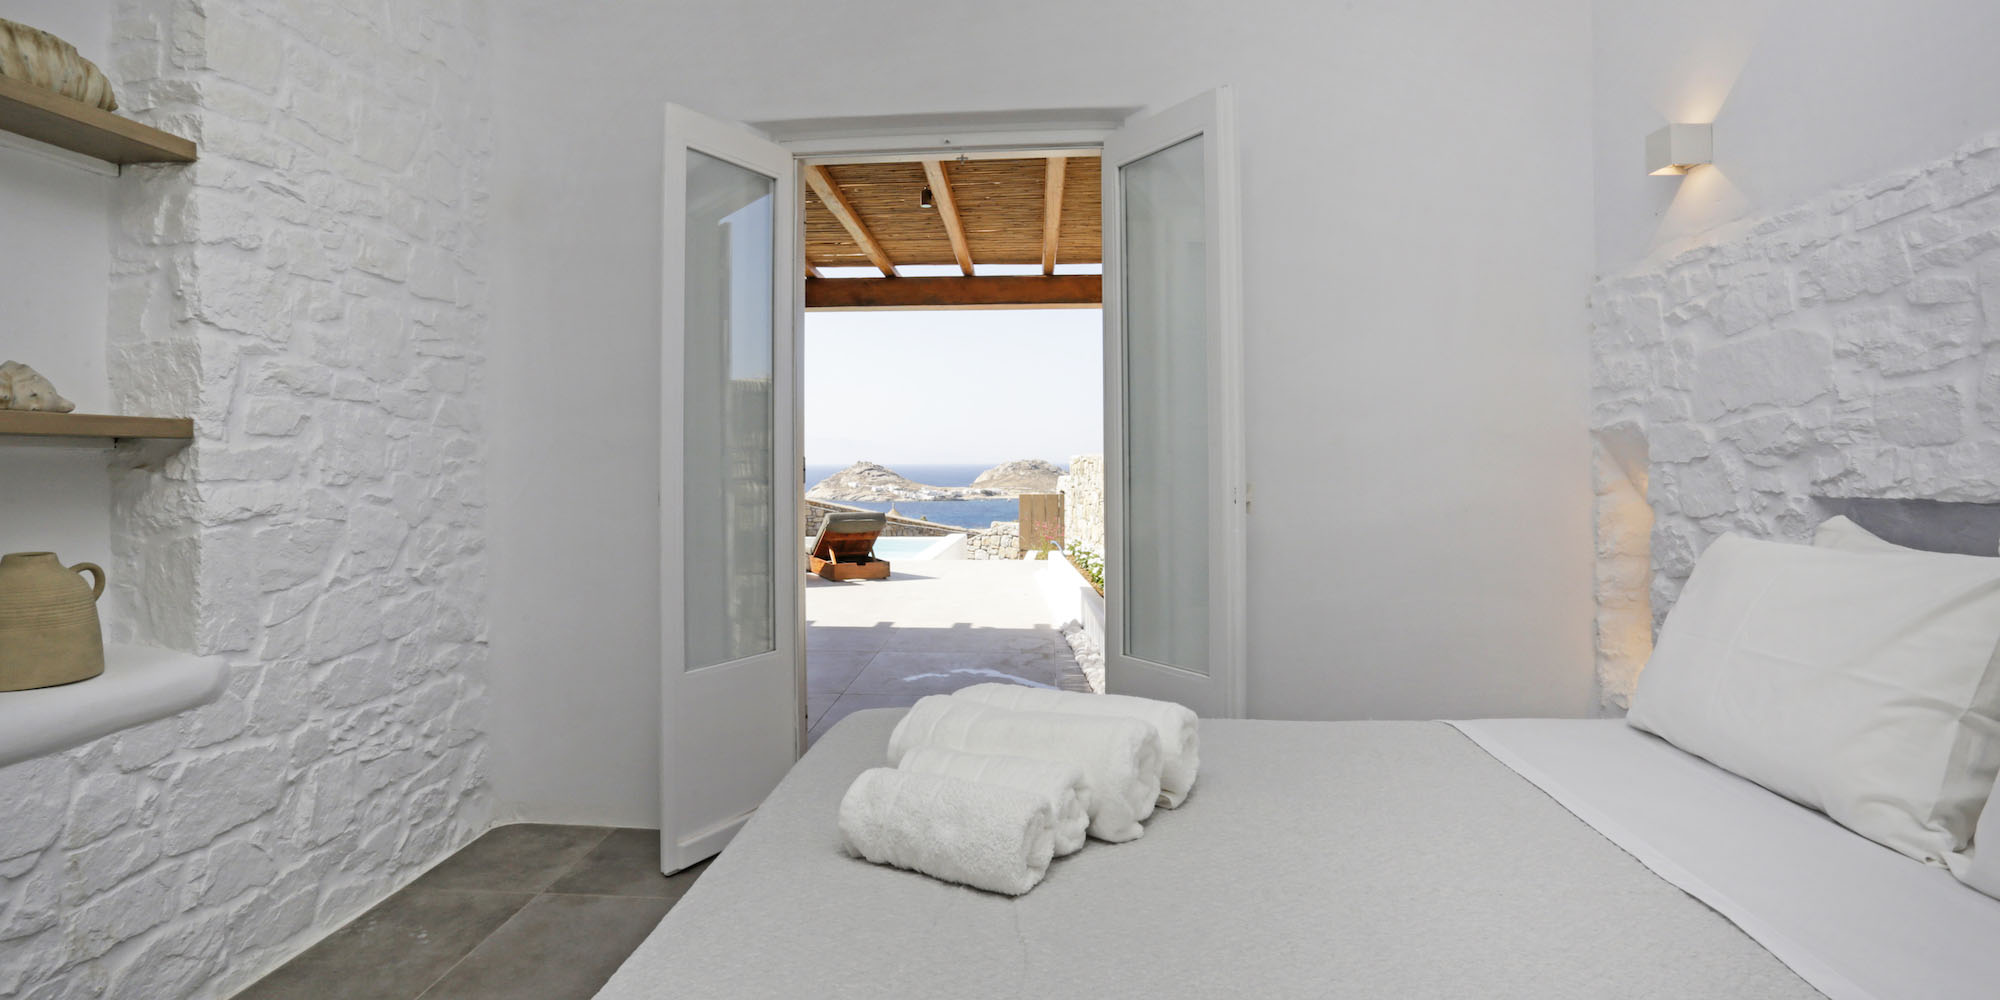 Case a Mykonos, Villa Lydia: bedroom details